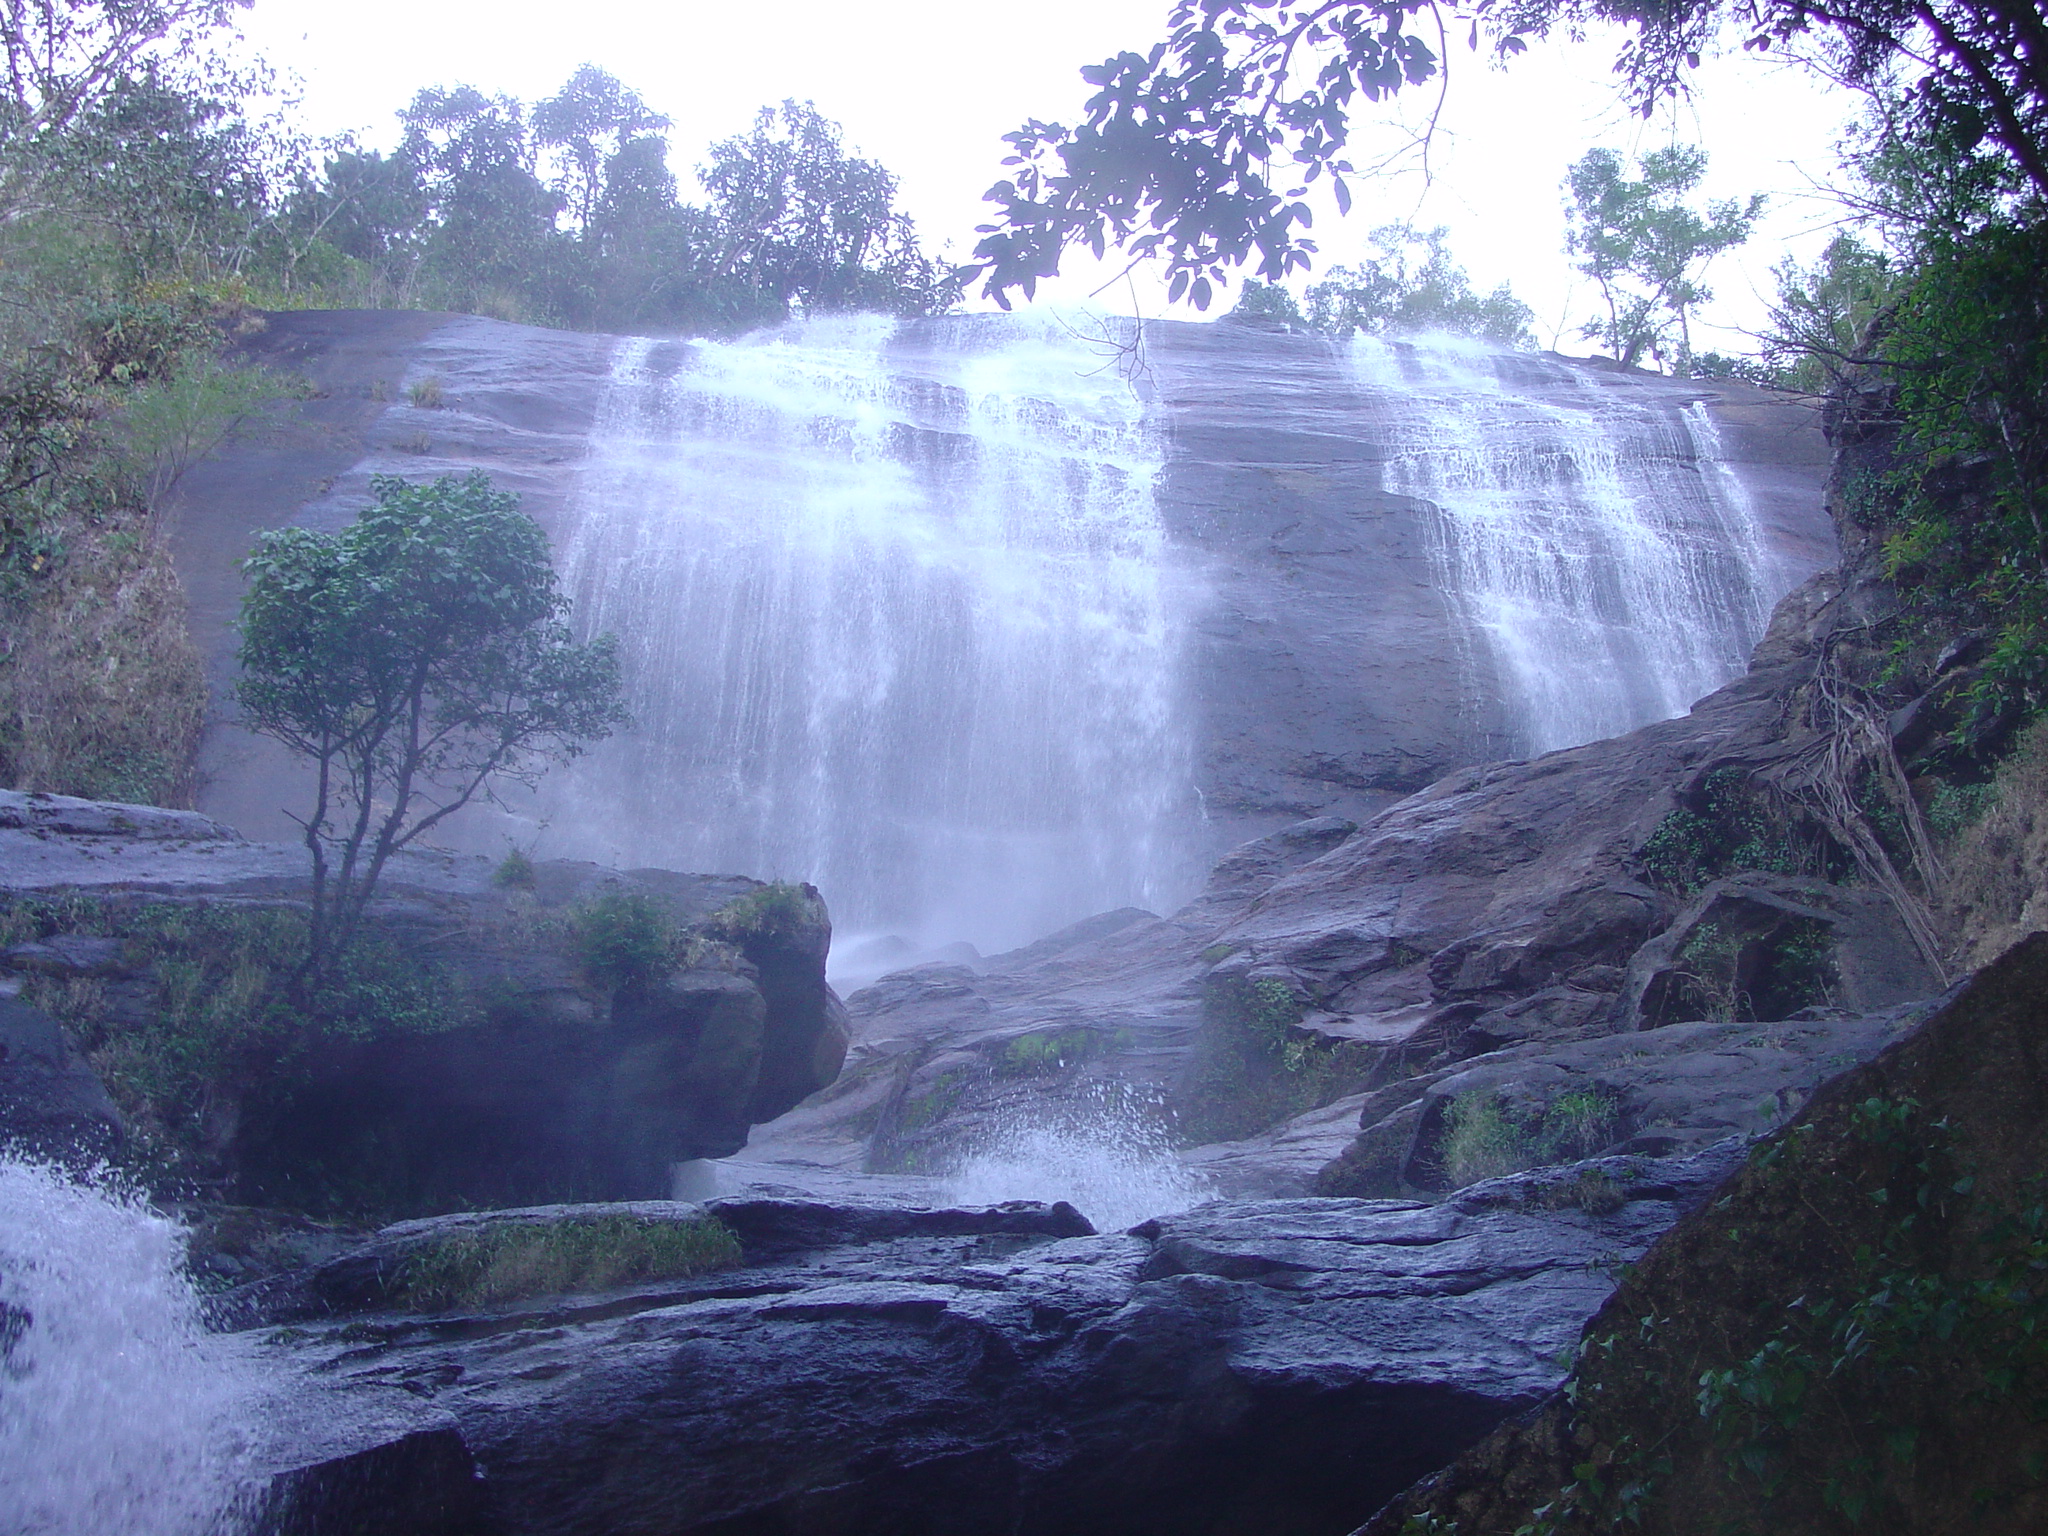 Maetow waterfall